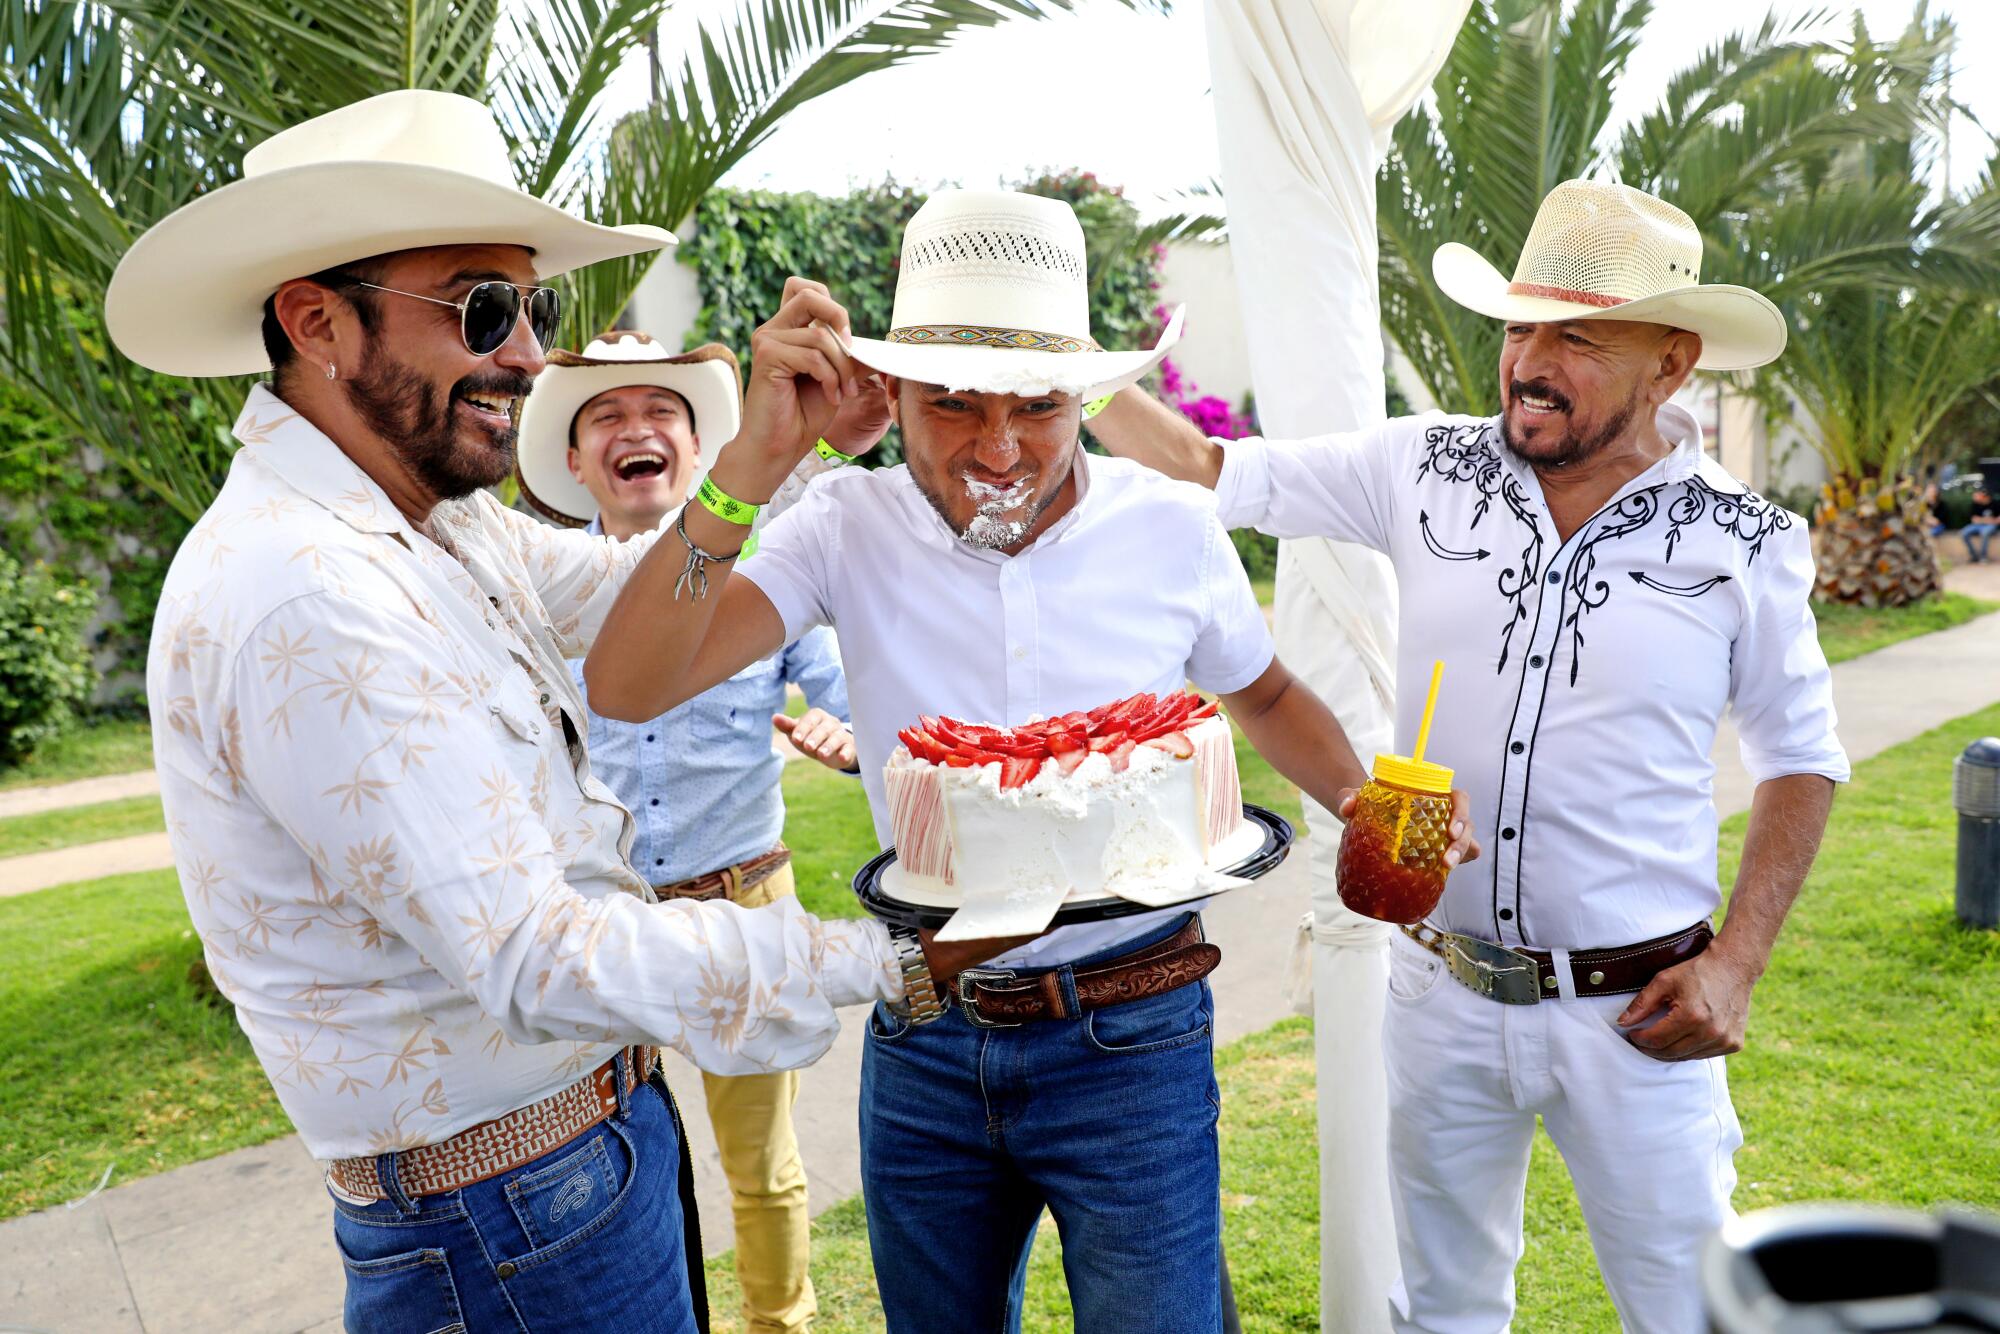 Gay vaquero conventions celebrate cowboys, identity in Mexico - Los Angeles  Times